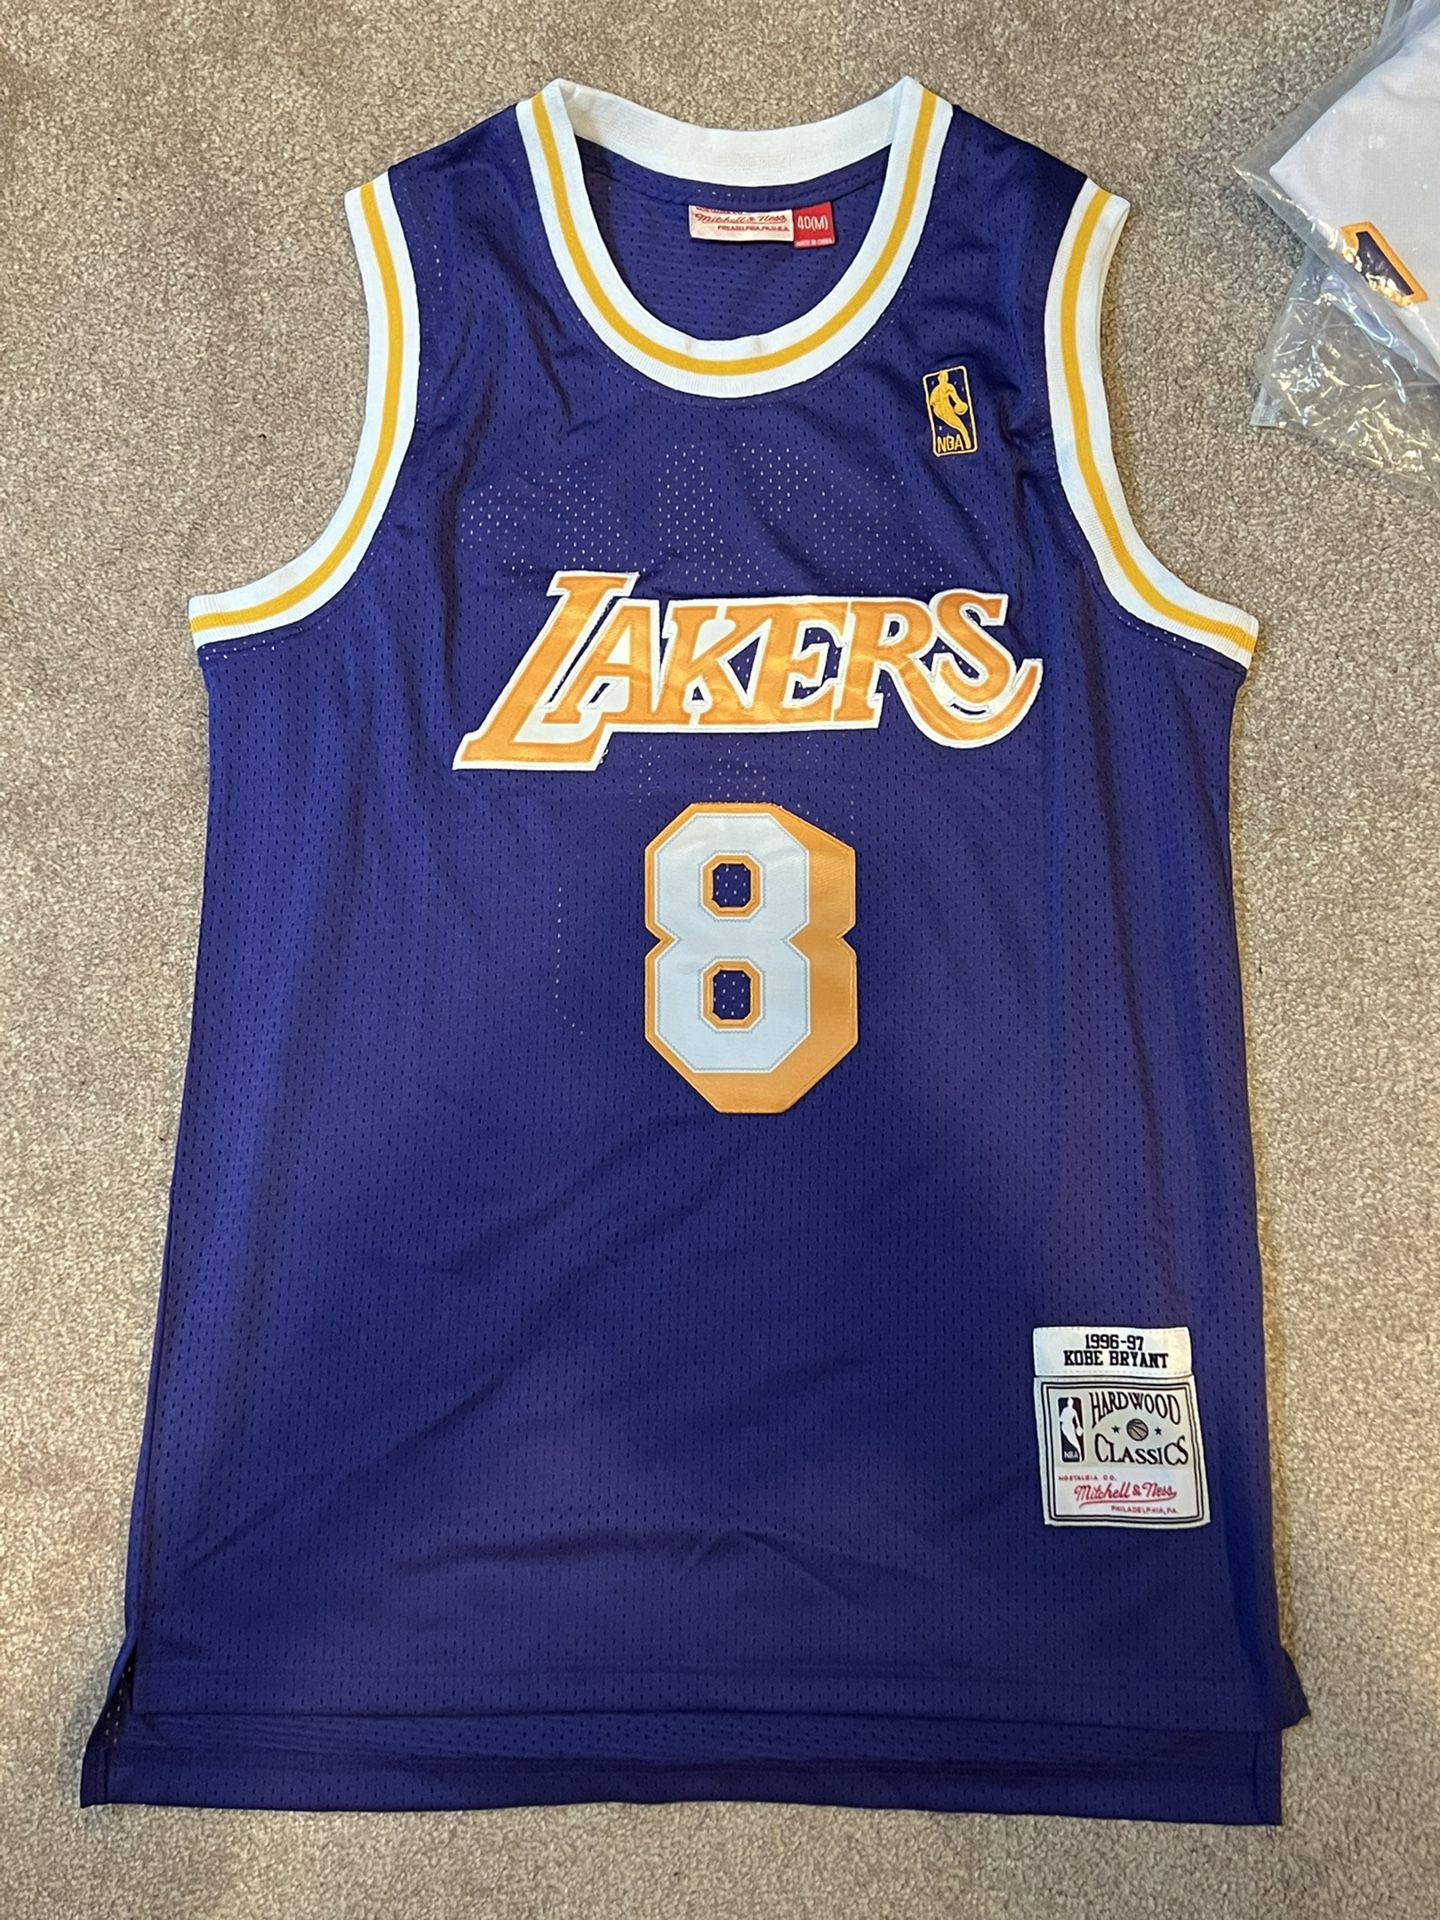 Kobe Bryant Lakers Purple Jersey Size Medium